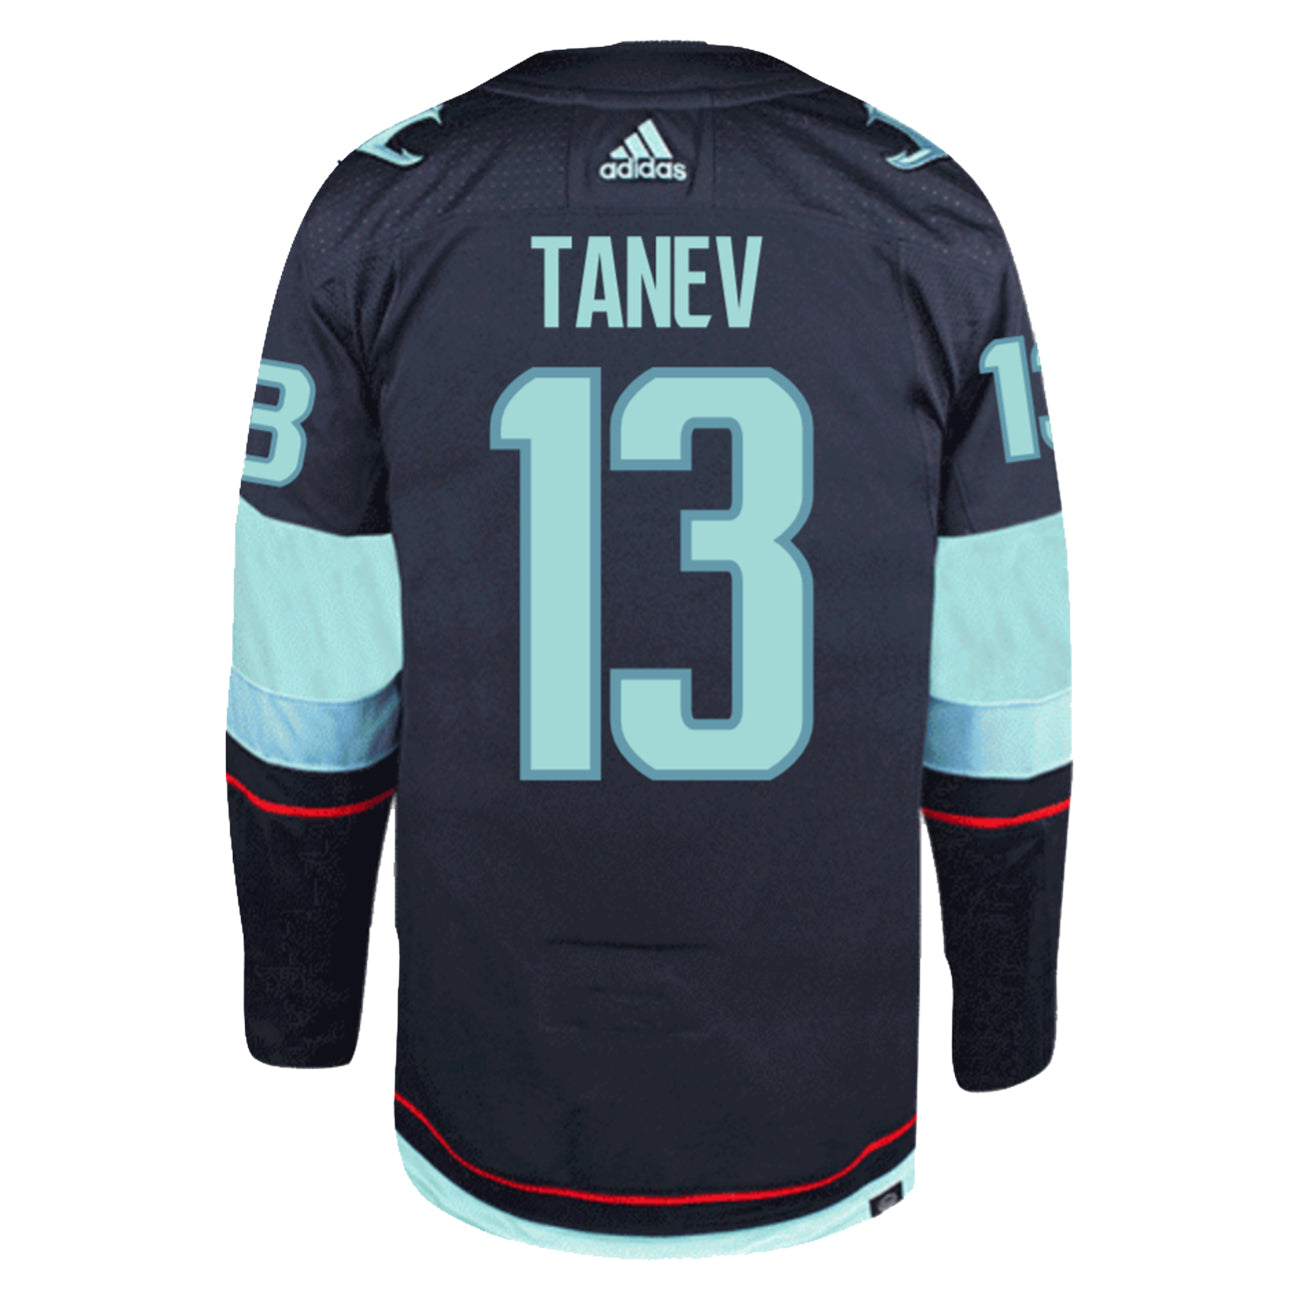 NHL Youth Seattle Kraken Brandon Tanev #13 Premier Jersey